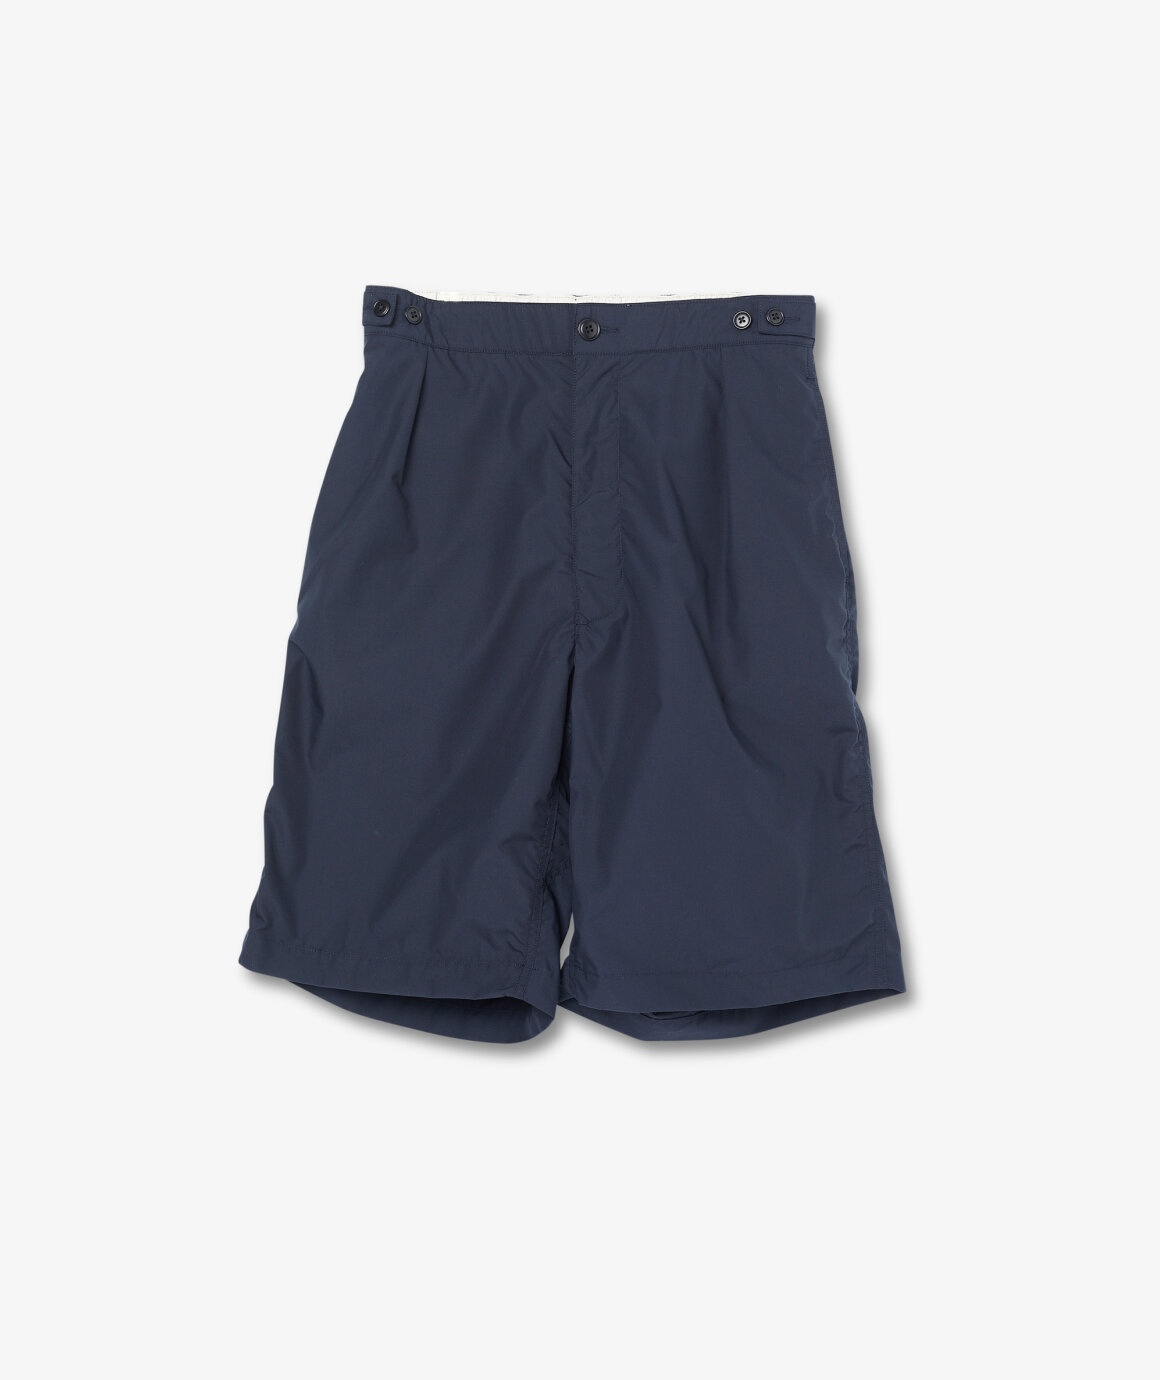 Deck Shorts - 1